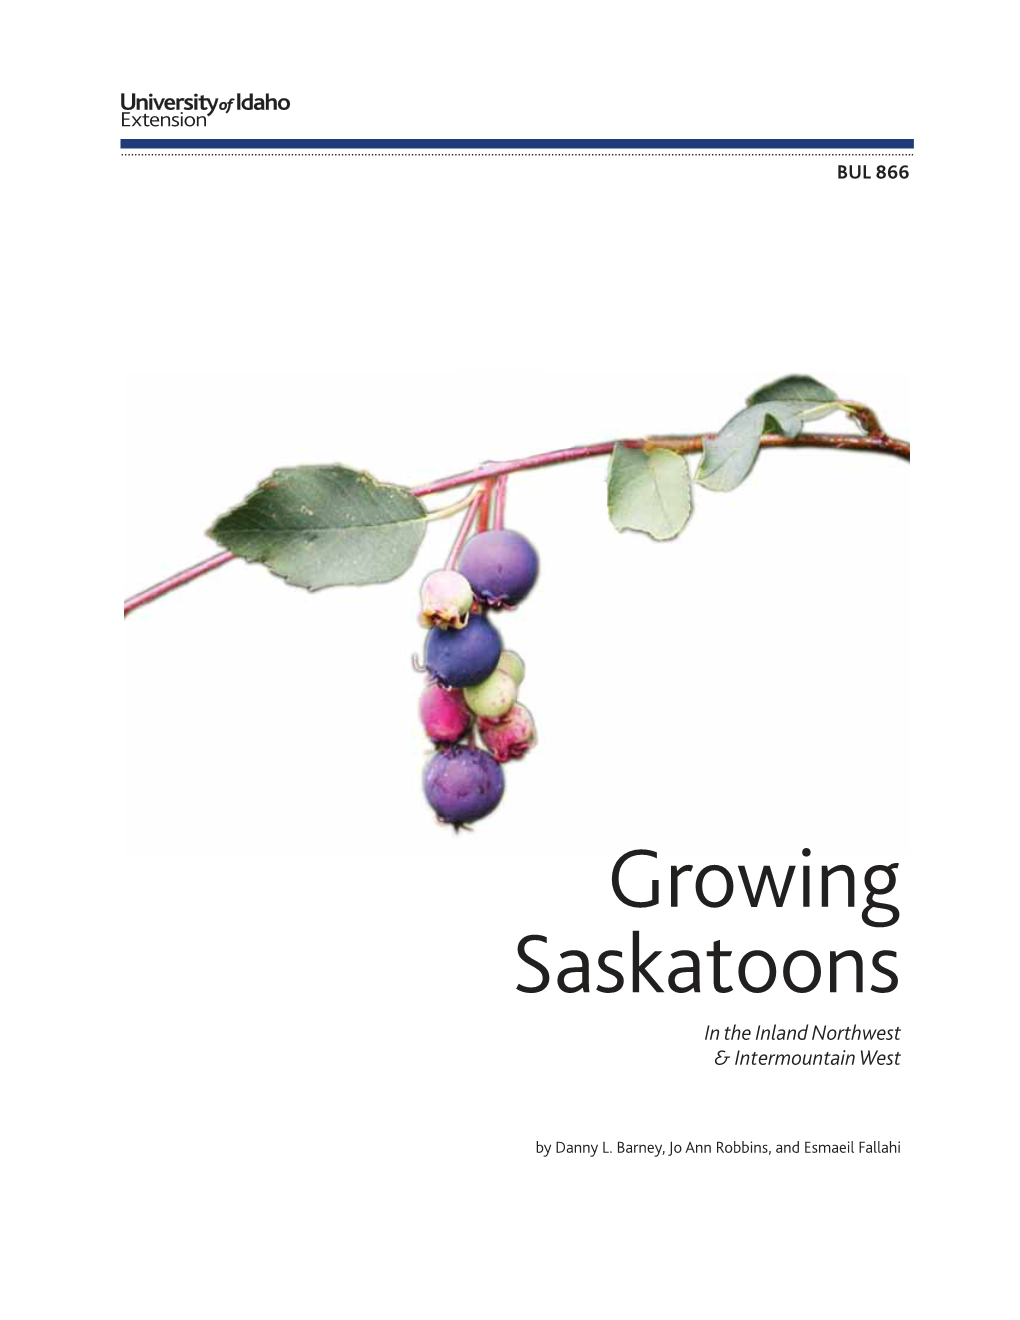 Growing Saskatoons in the Inland Northwest & Intermountain West